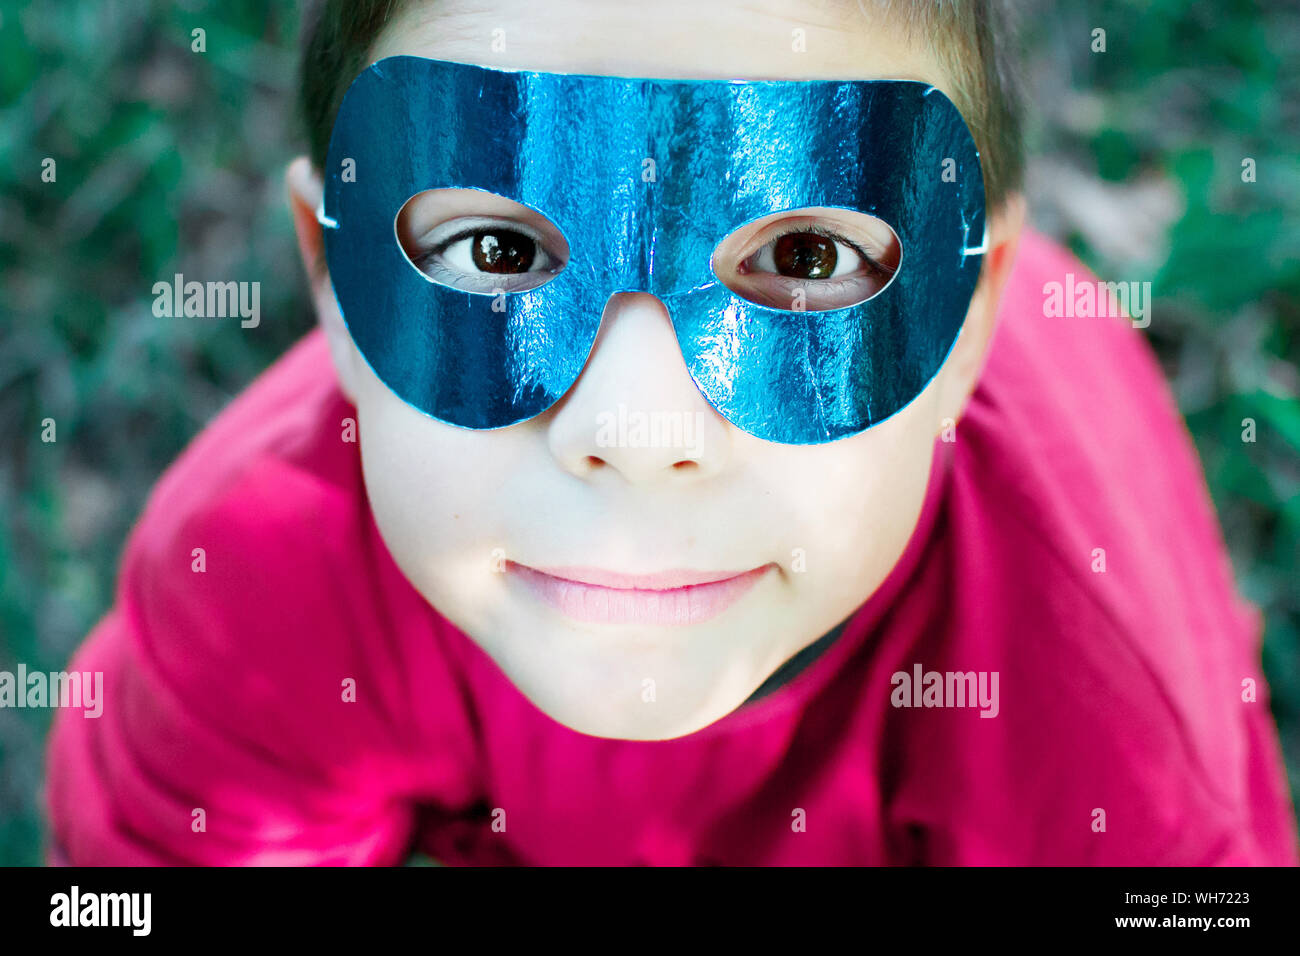 Maschera blu immagini e fotografie stock ad alta risoluzione - Alamy